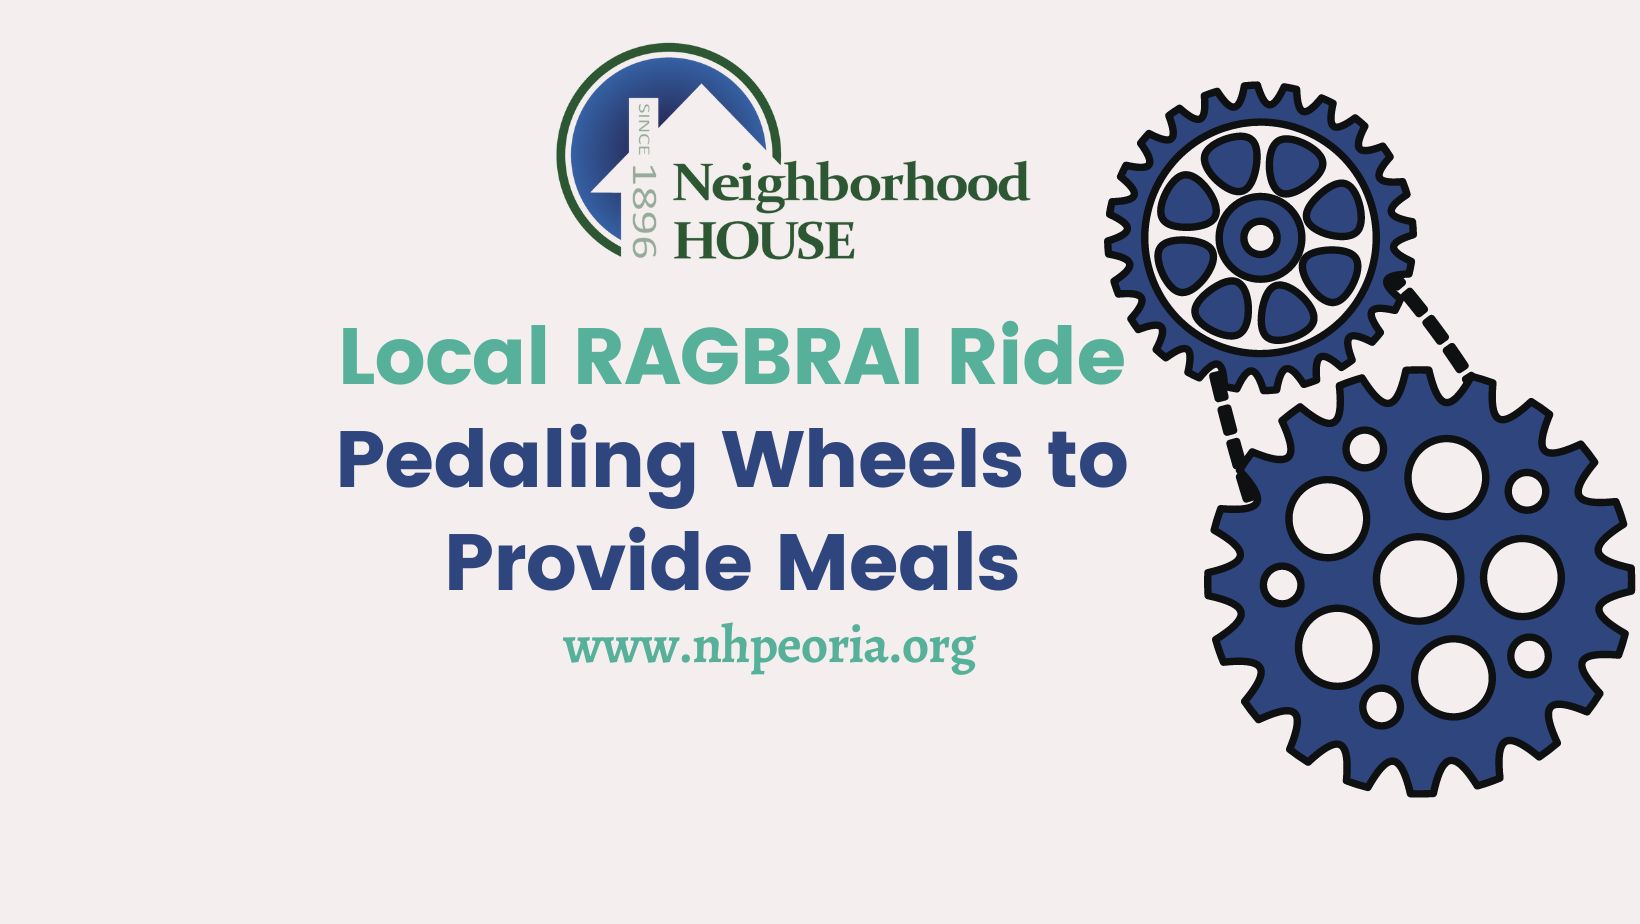 Neighborhood House Pedaling Wheels to Provide Meals